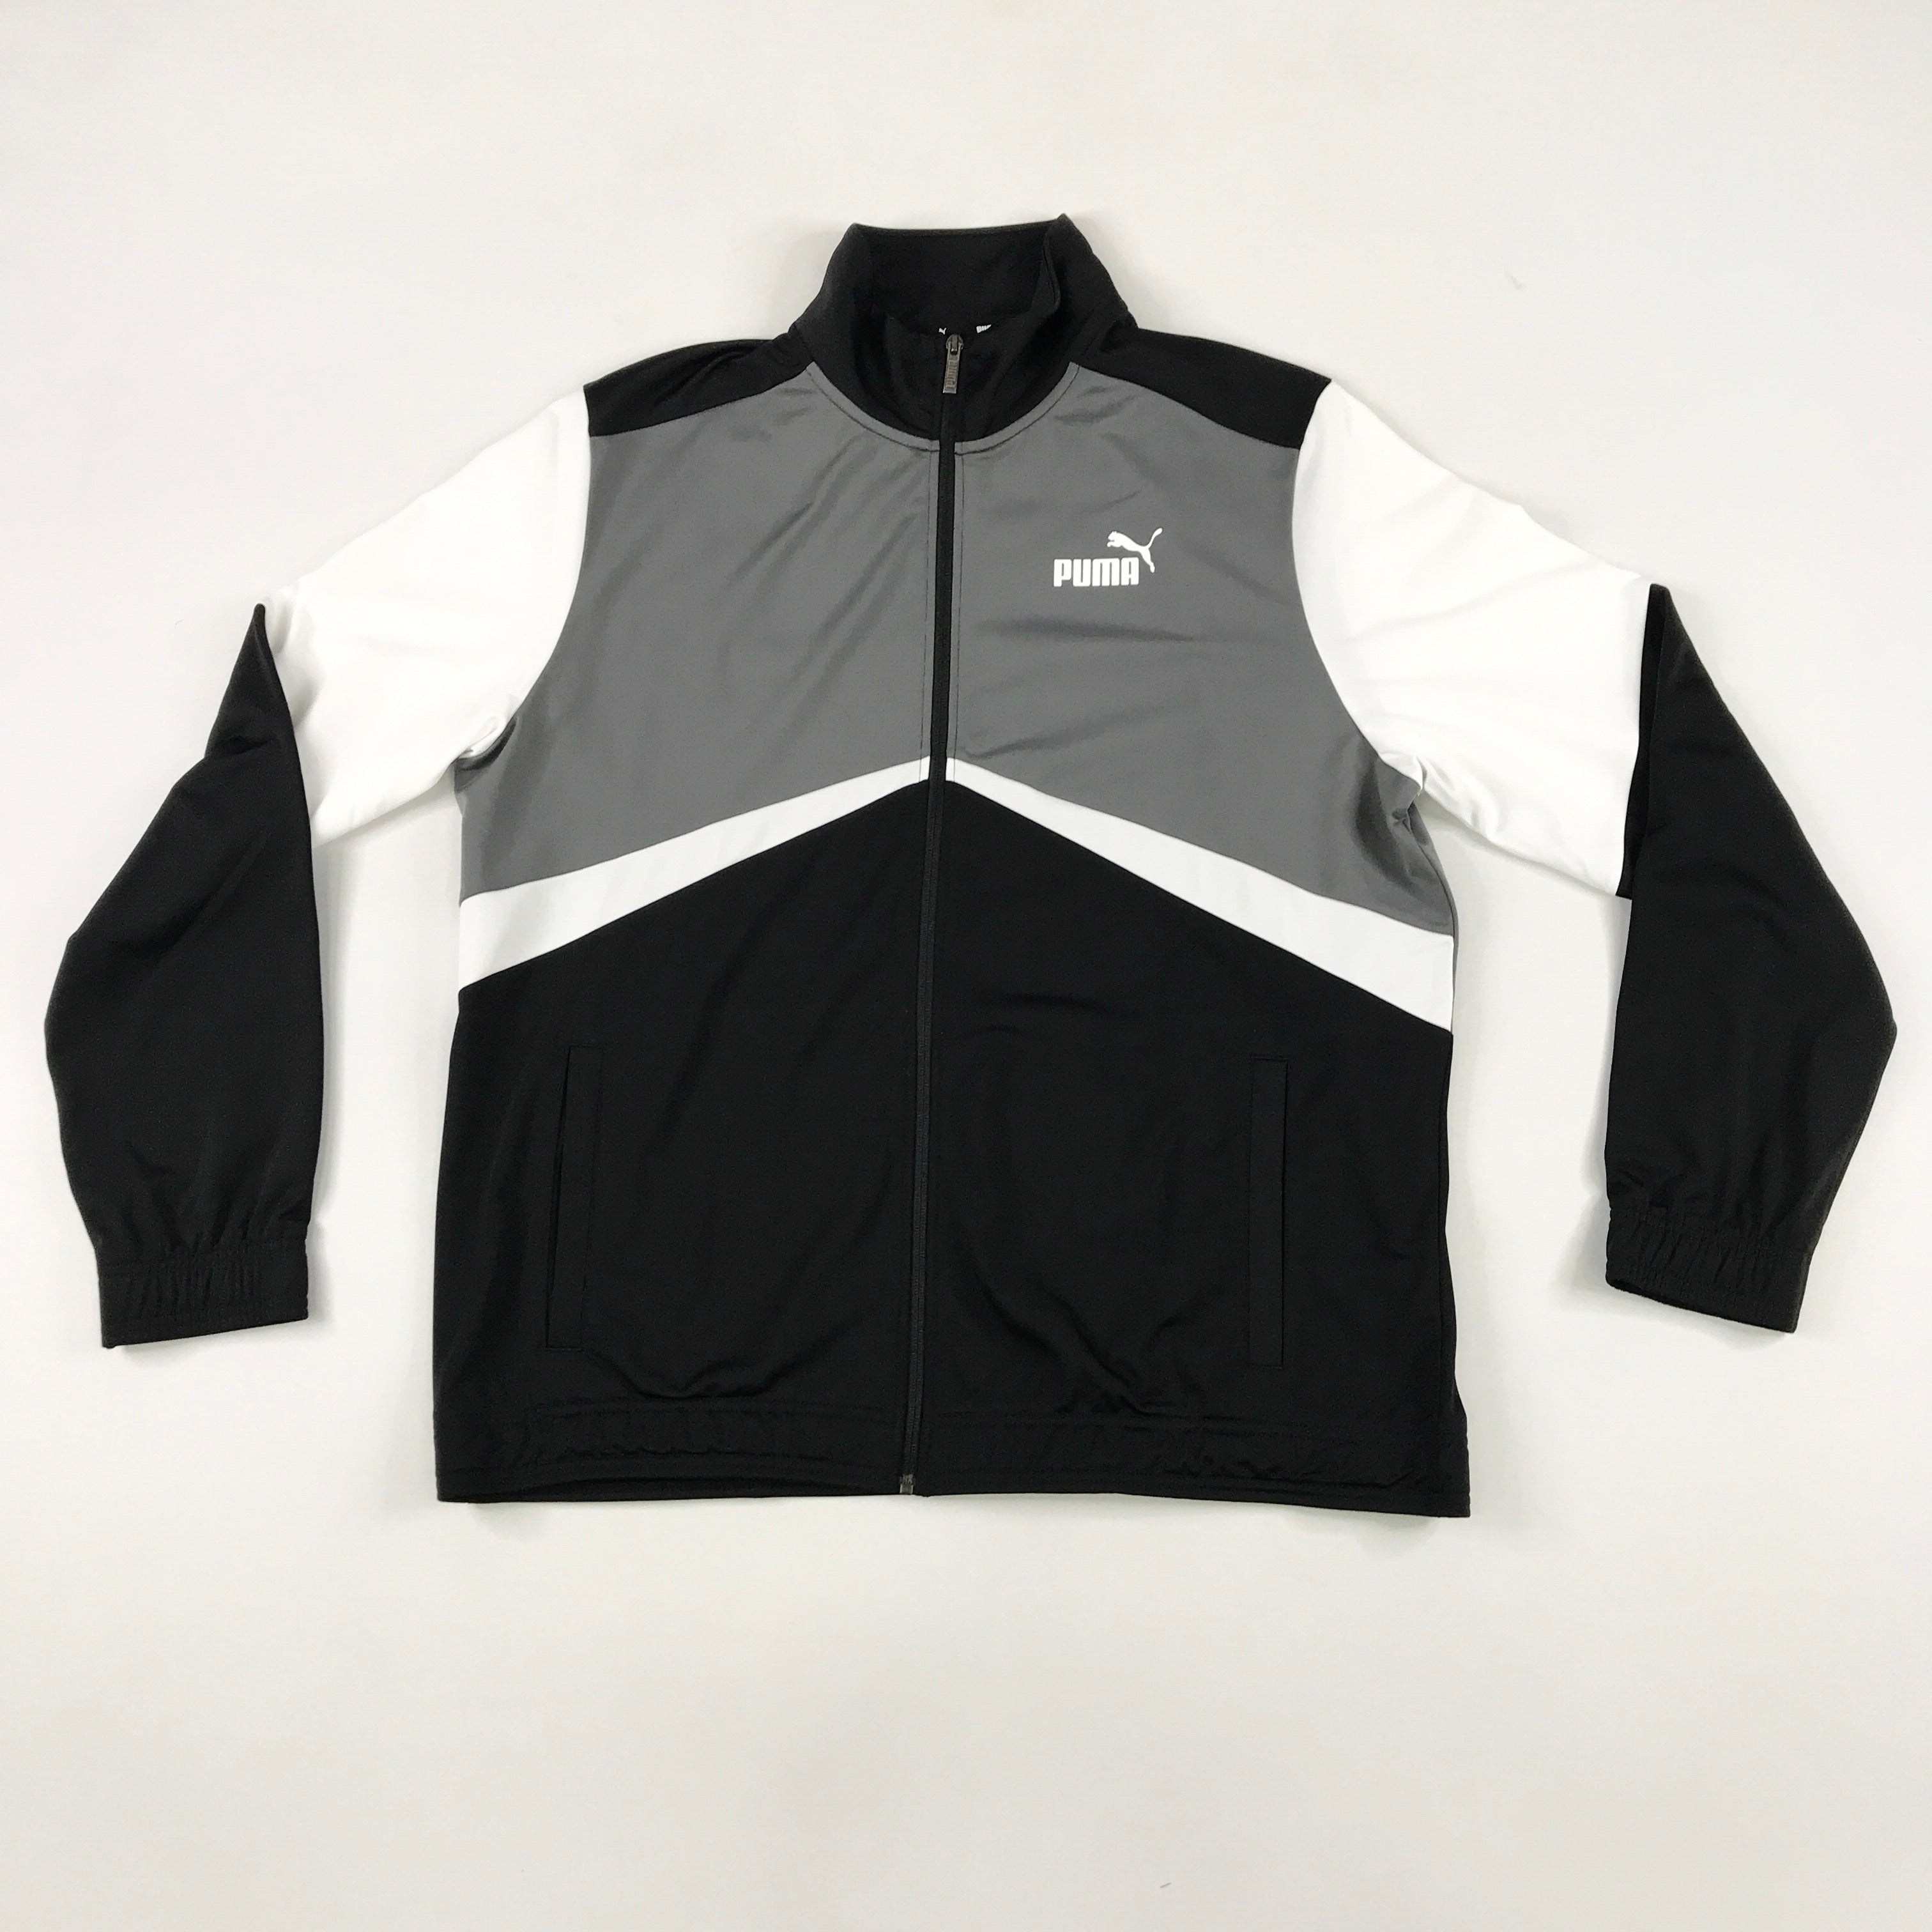 Puma CB Retro track jacket in black-grey-white